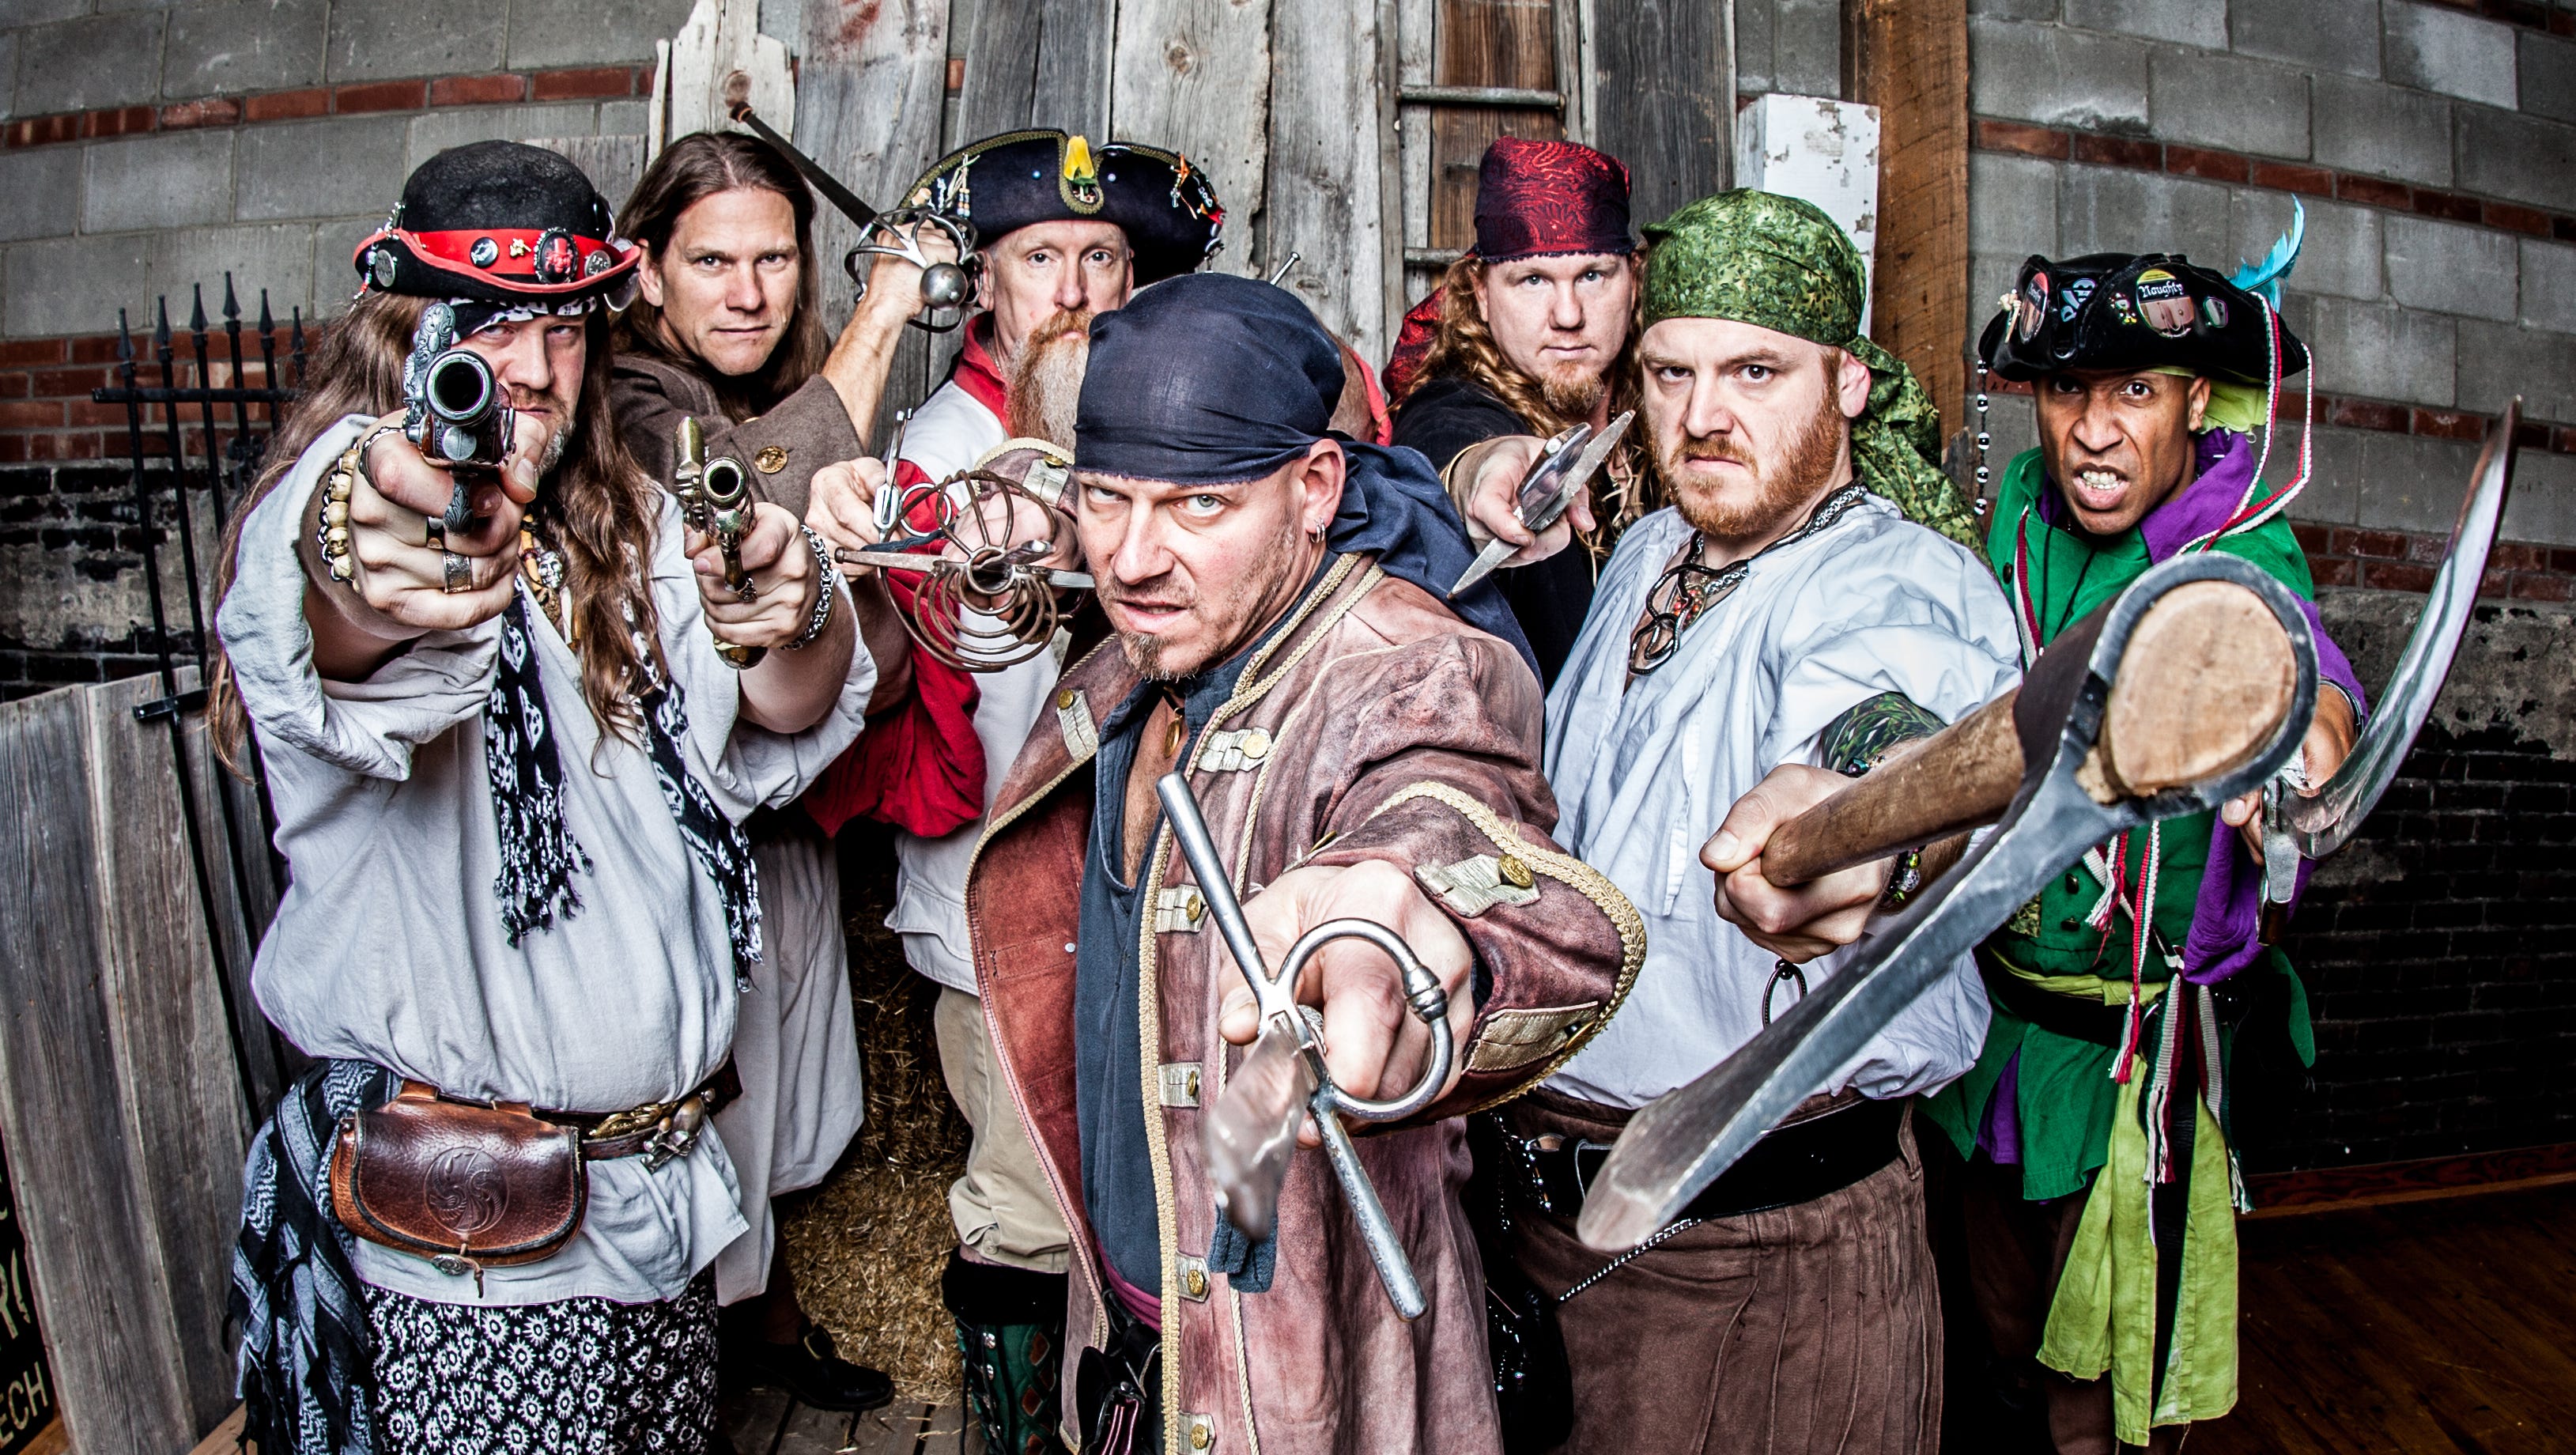 Musical Blades brings pirate gags to renaissance faire